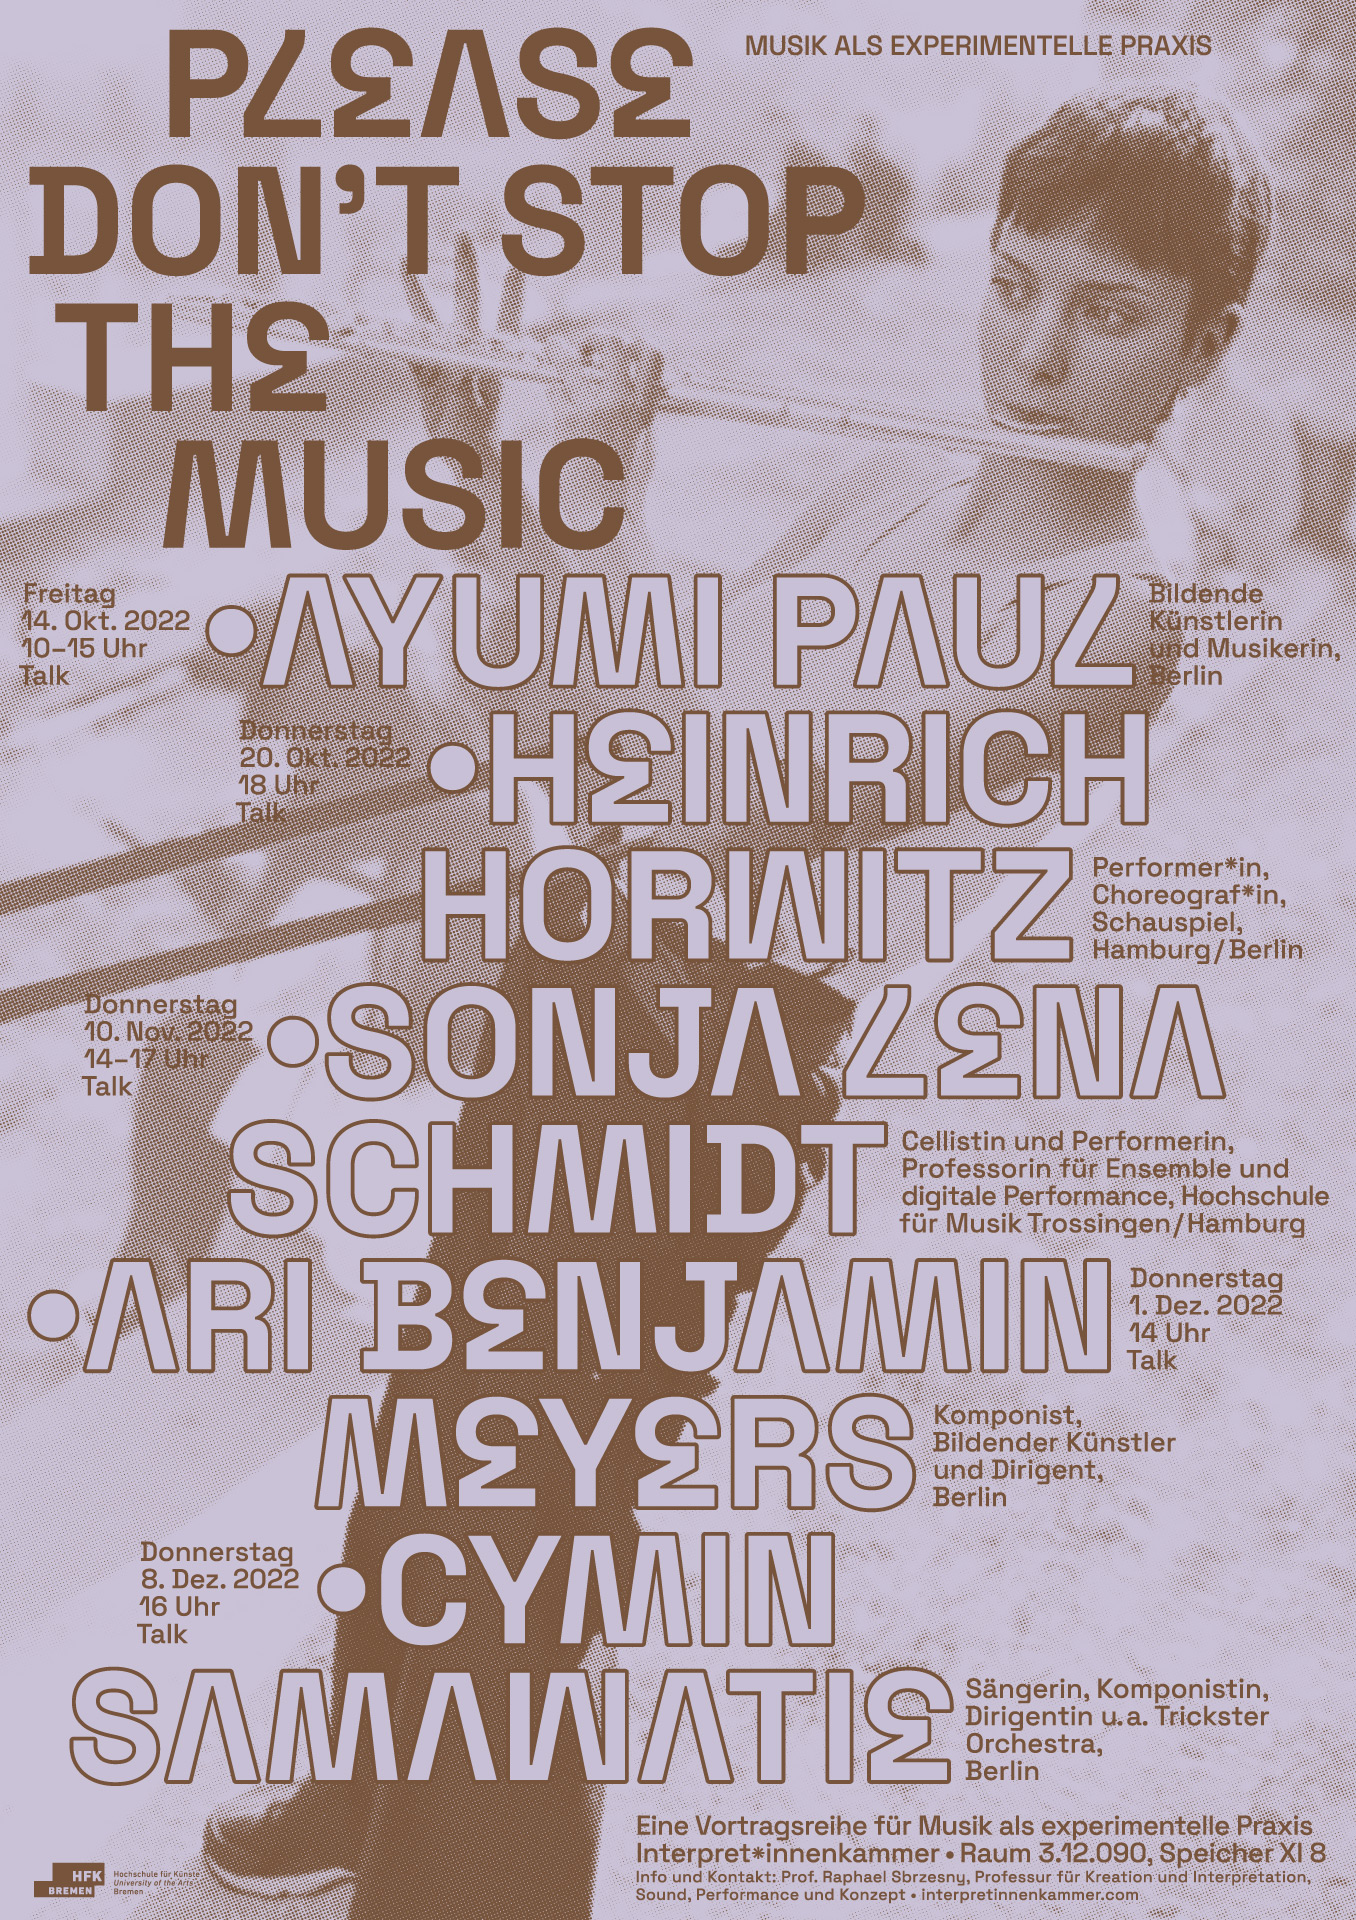 Plakat PLEASE DONT STOP THE MUSIC, Gestaltung: Christine Claussen + Ruben Lyon